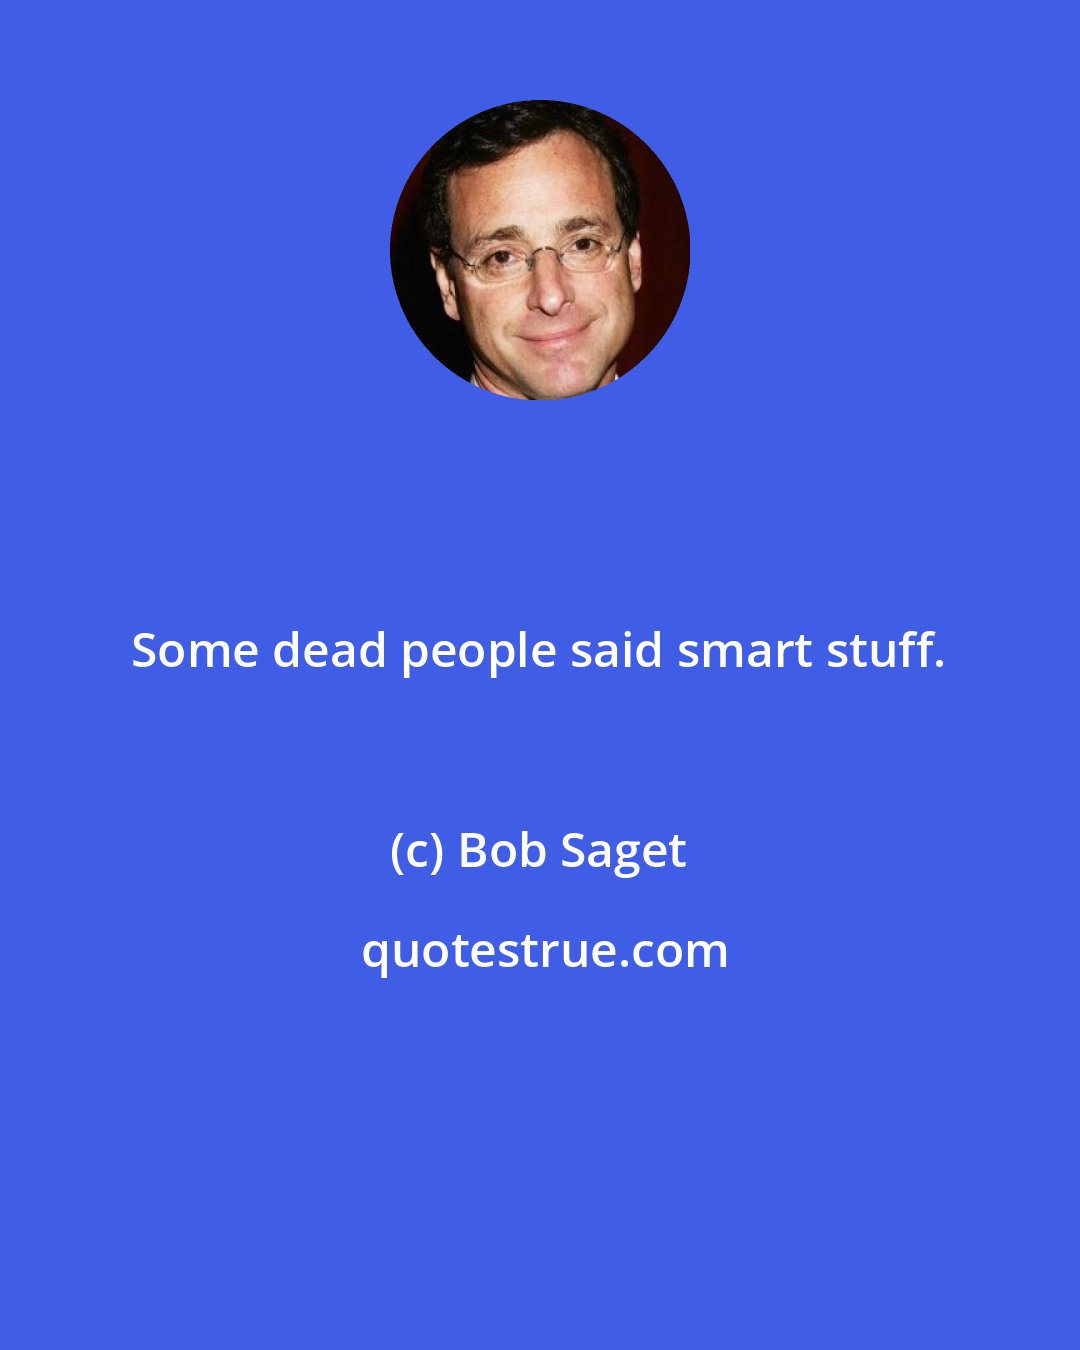 Bob Saget: Some dead people said smart stuff.